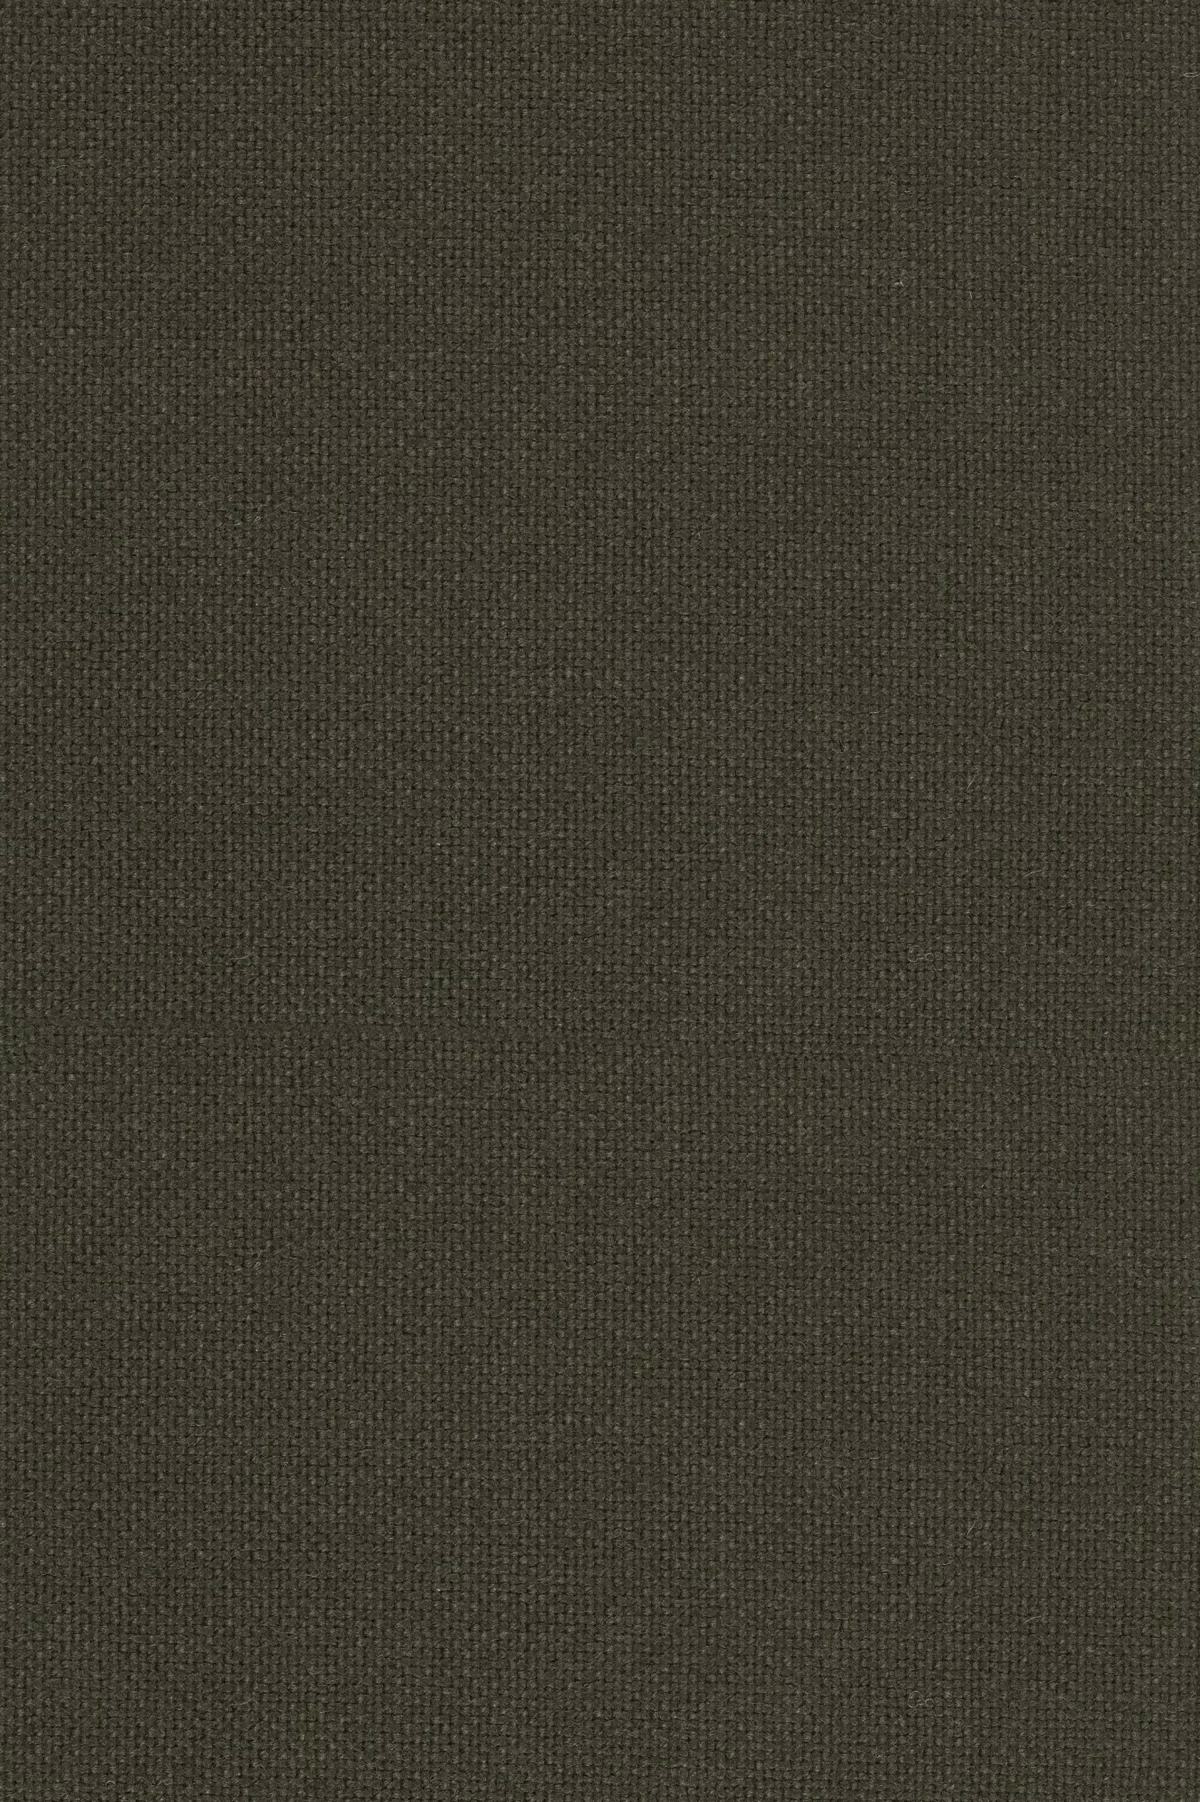 Fabric sample Hallingdal 65 390 grey